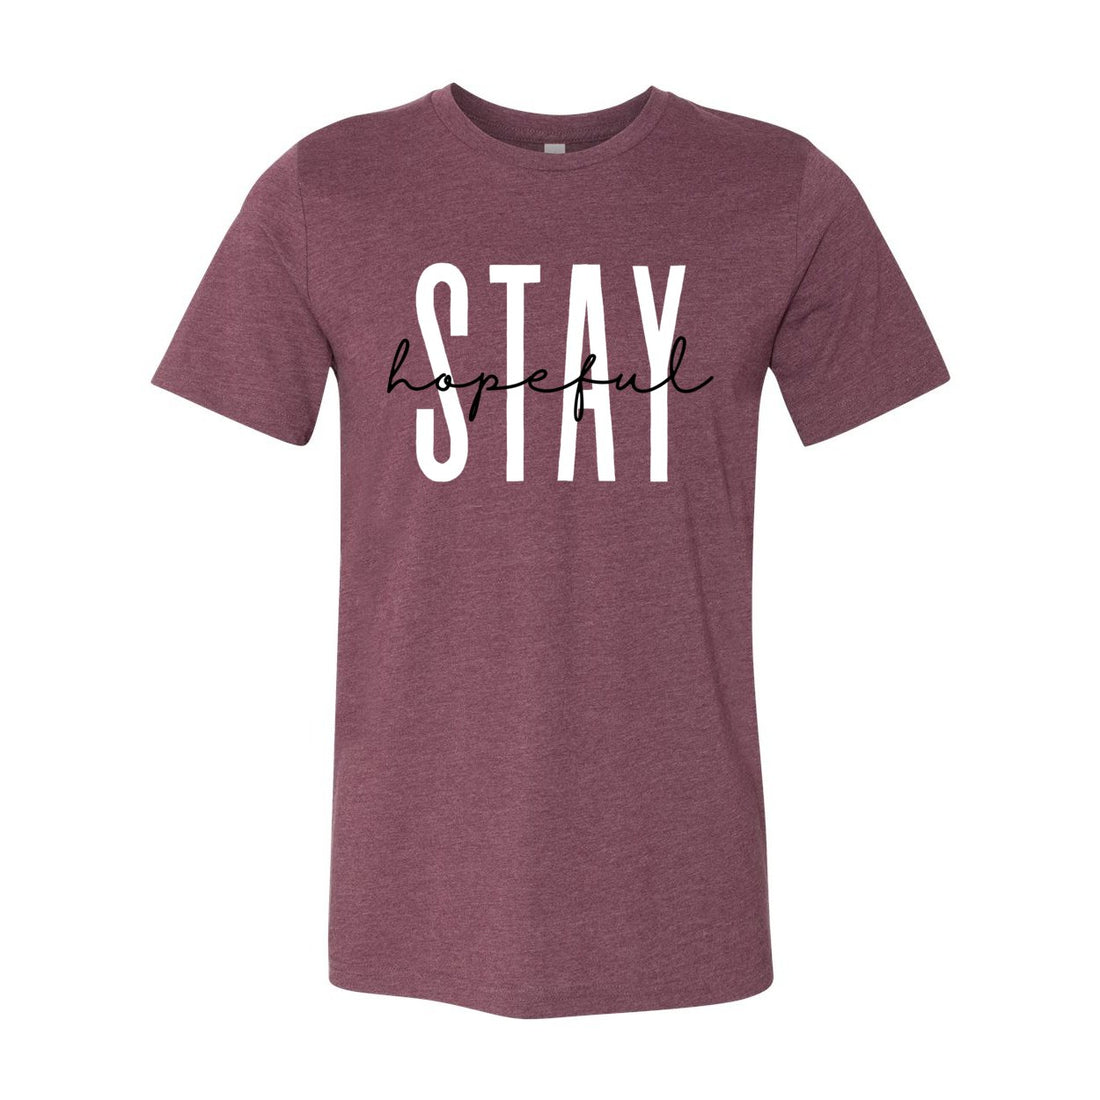 Stay Hopeful Short Sleeve Jersey Tee - T-Shirts - Positively Sassy - Stay Hopeful Short Sleeve Jersey Tee